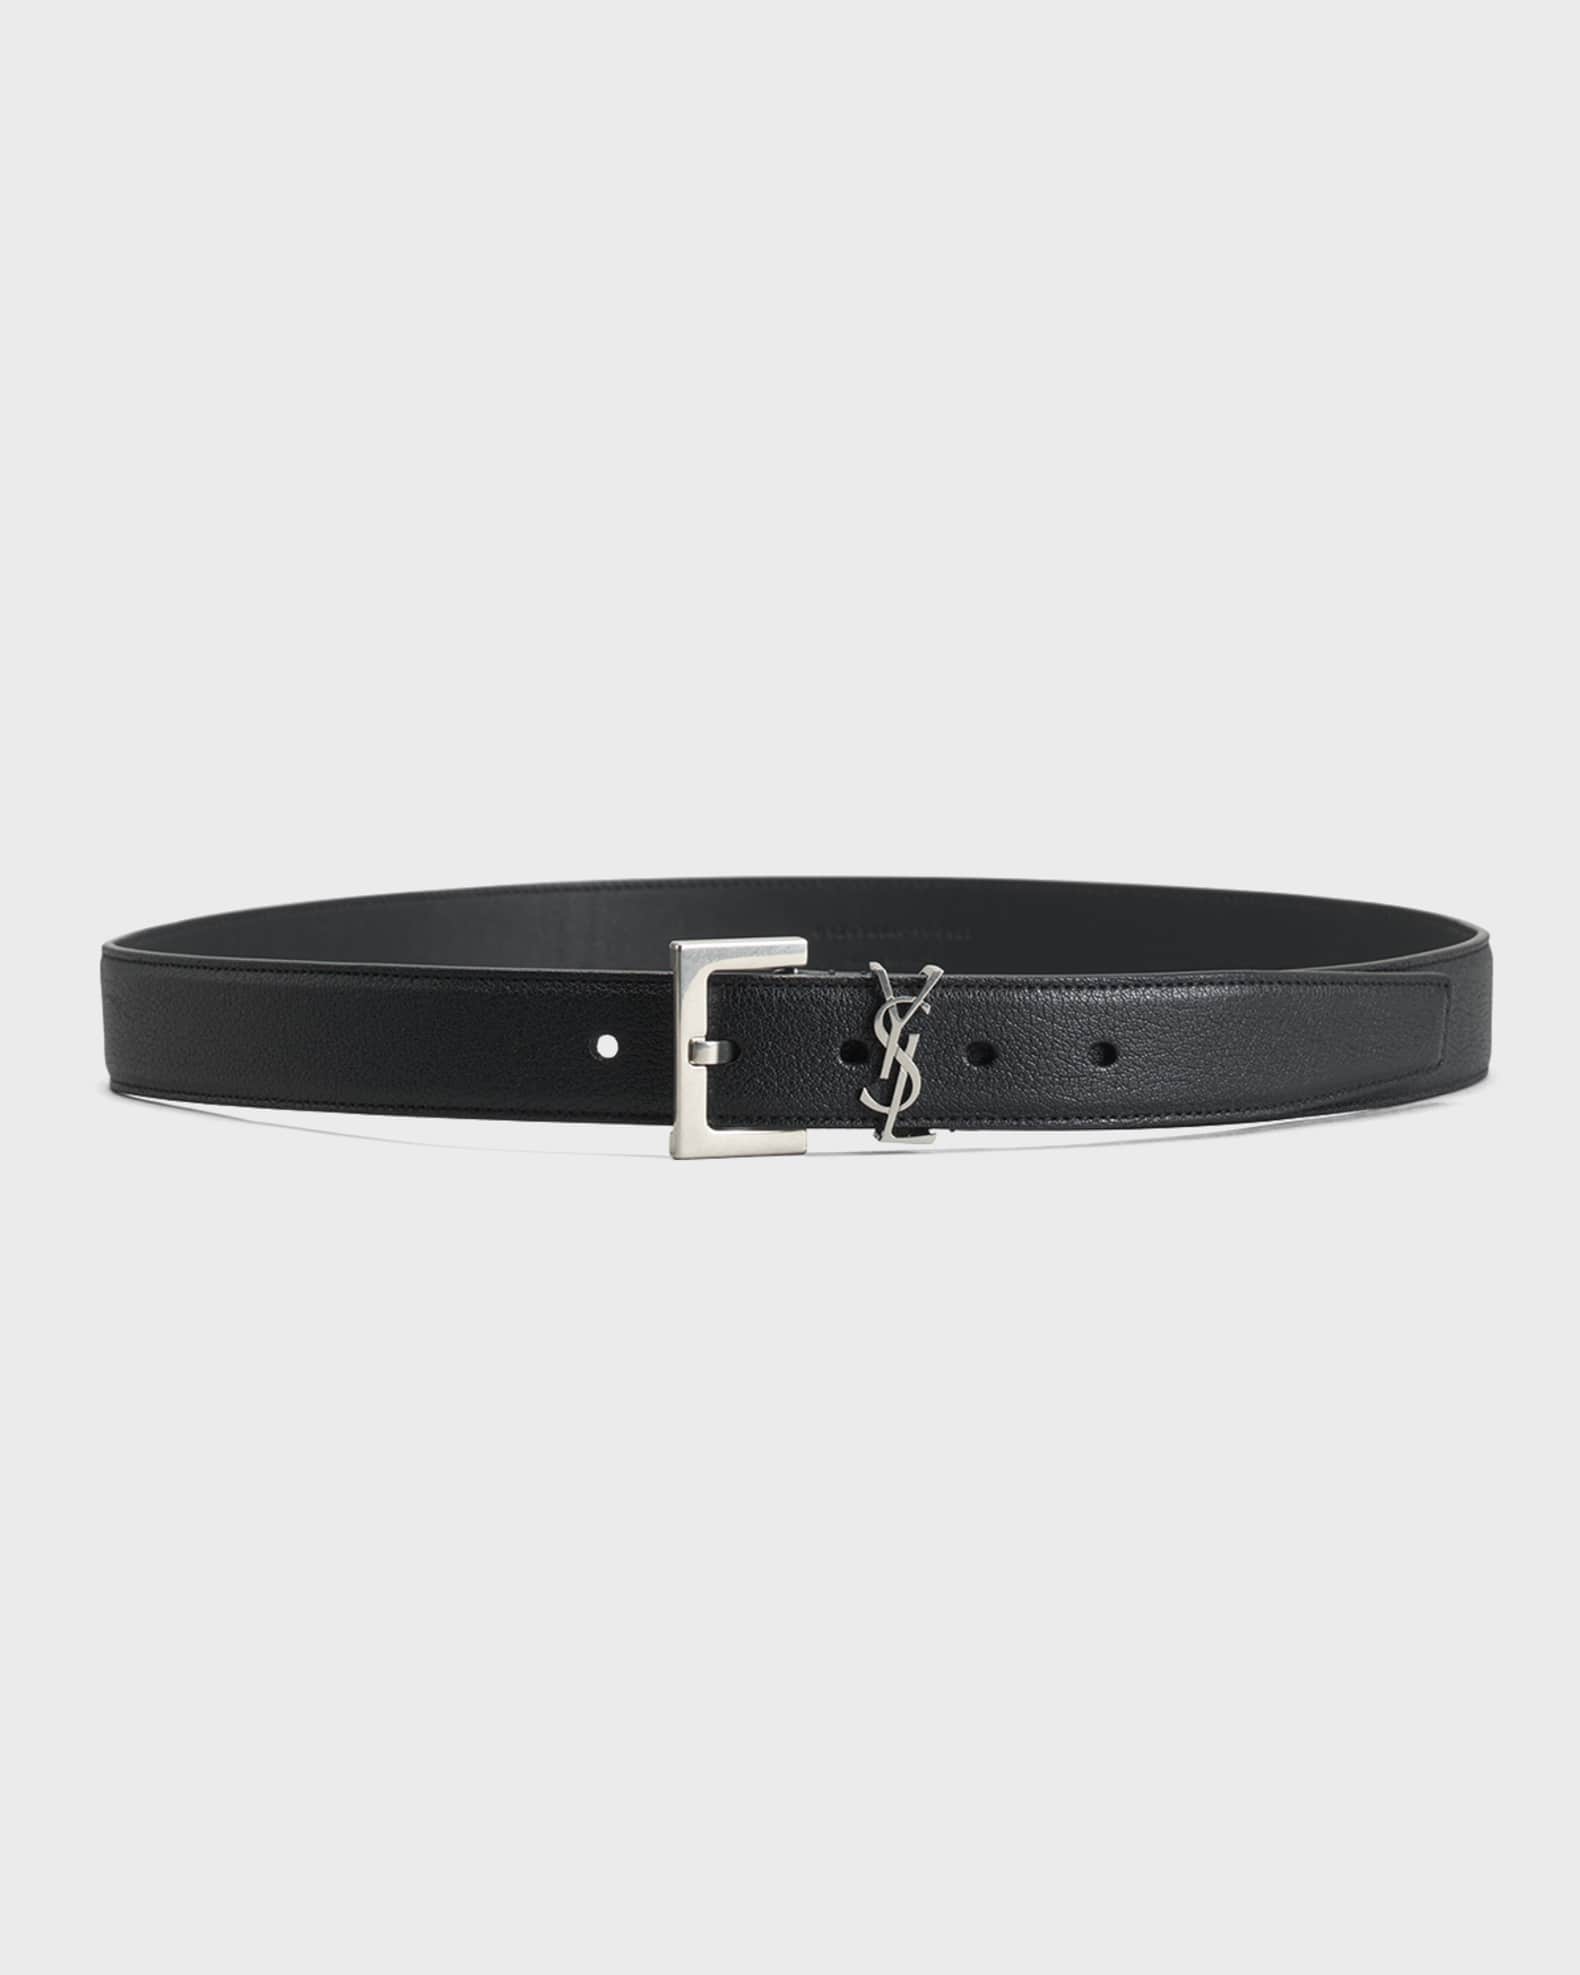 Ysl Leather Belt